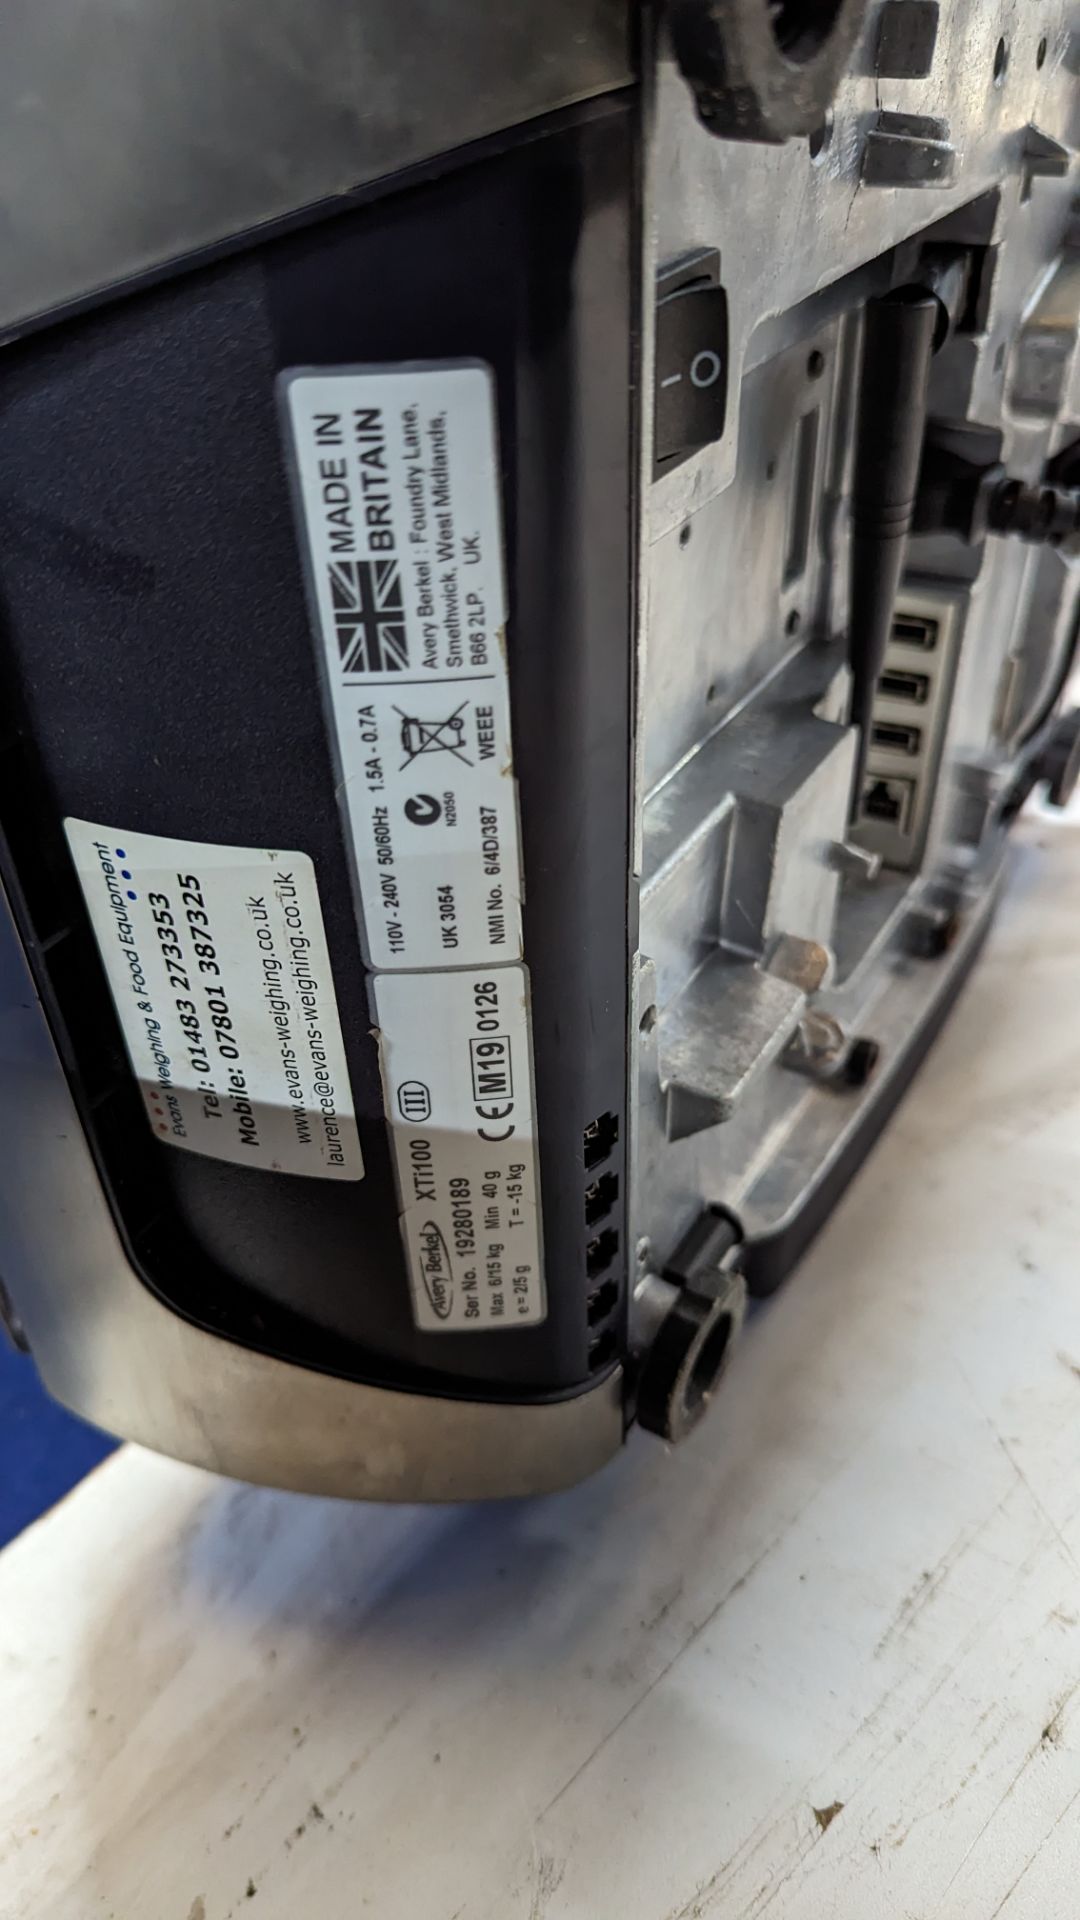 Avery Berkel Xti 100 Label & Receipt printing scale. 6kg/15kg capacity, 10" operator touchscreen dis - Image 9 of 18